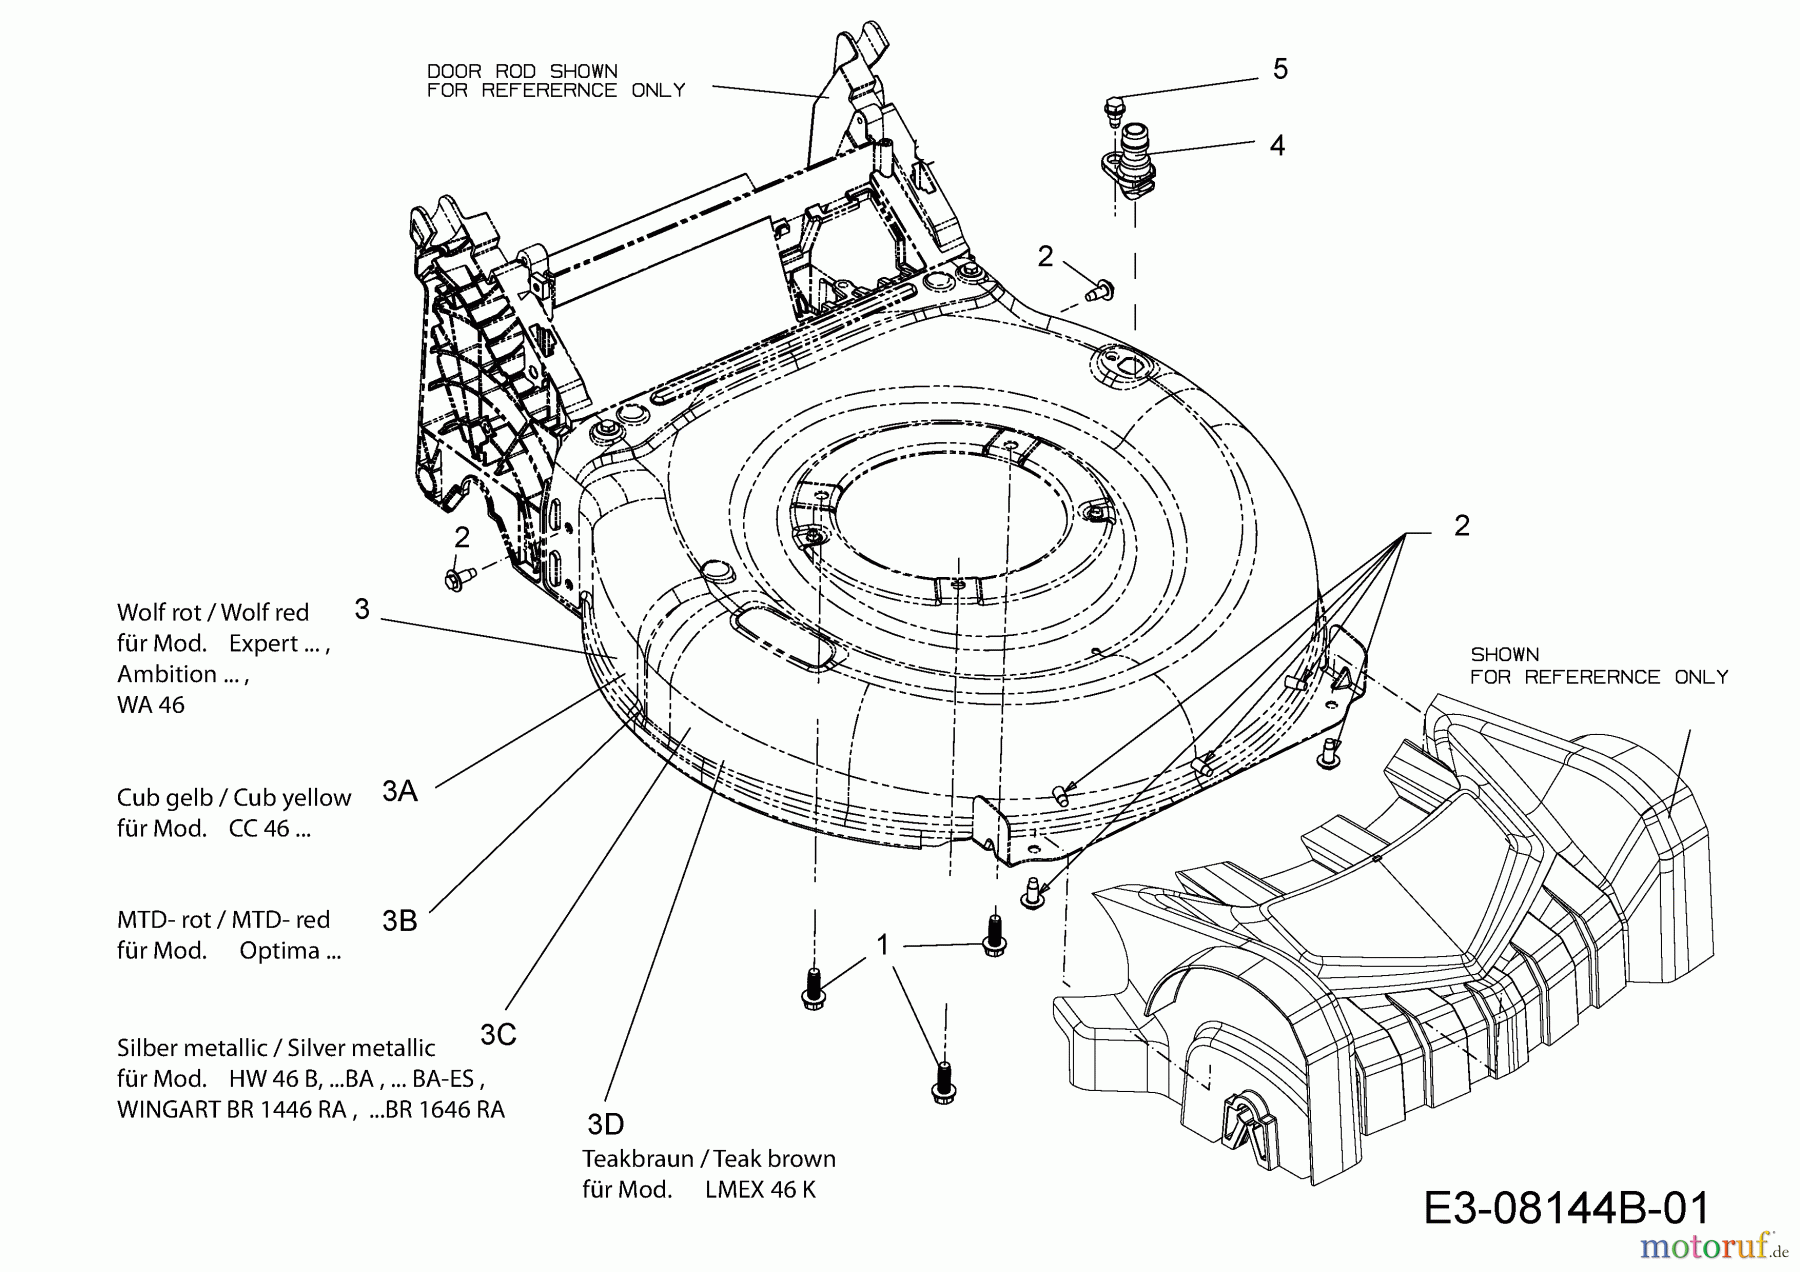  MTD Motormäher mit Antrieb LMEX 46 K 12A-TH7D682  (2015) Mähwerksgehäuse, Waschdüse